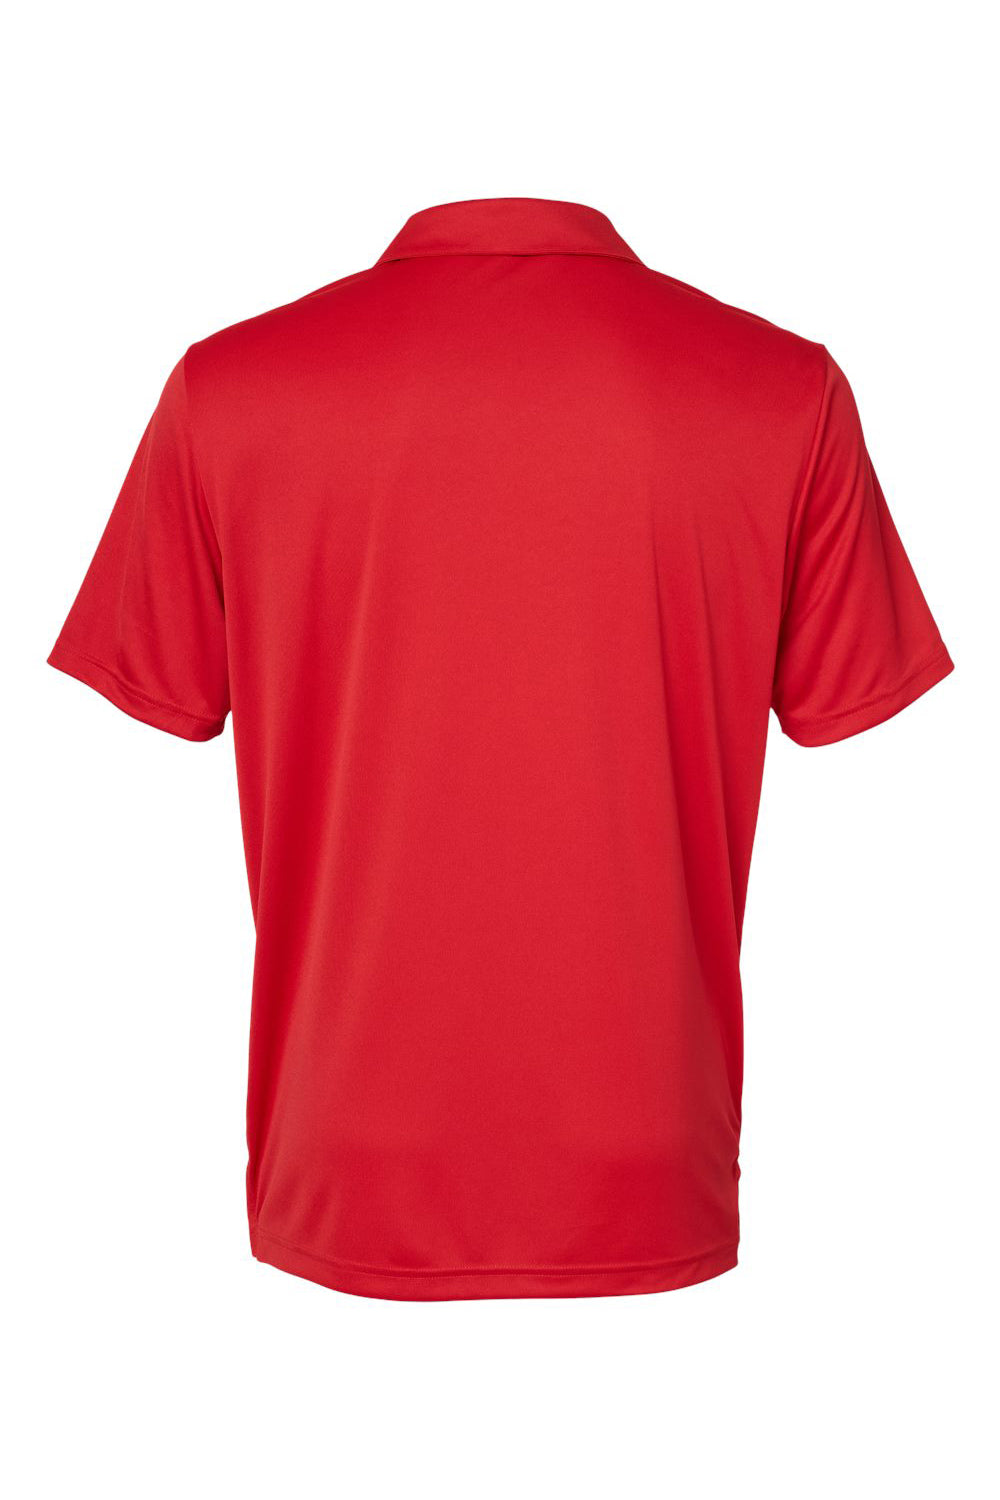 Adidas A324 Mens 3 Stripes UPF 50+ Short Sleeve Polo Shirt Collegiate Red/Black Flat Back